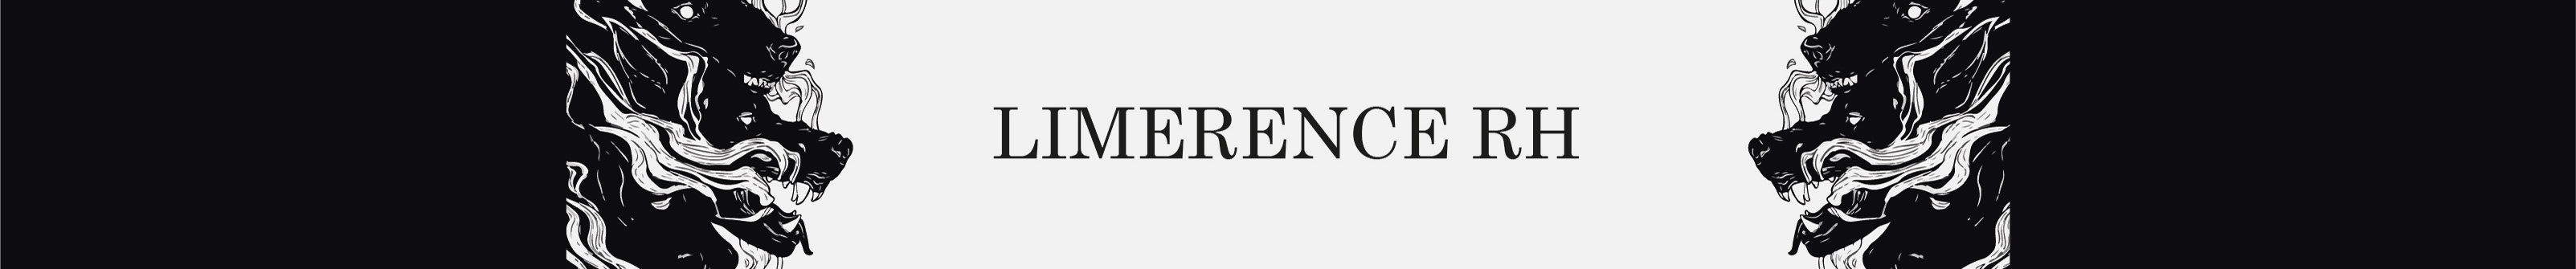 LIMERENCE RH's profile banner